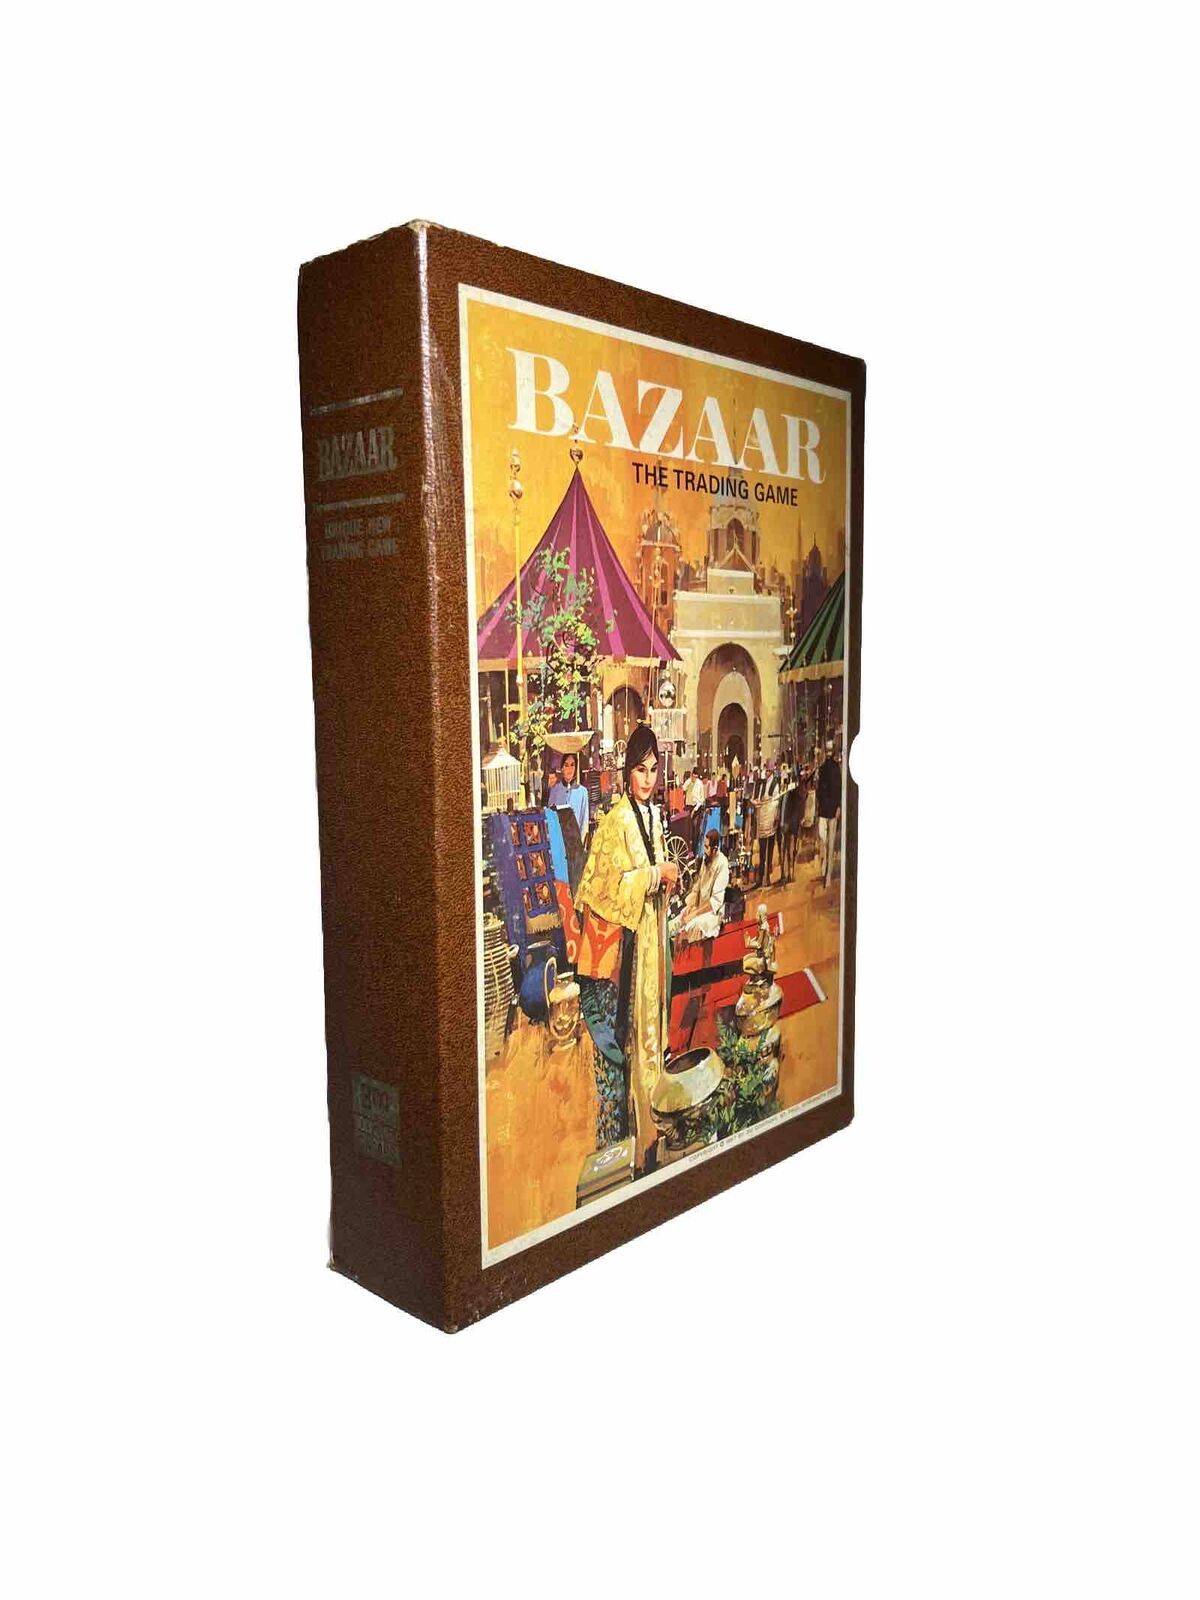 Bazaar Vintage 1967 3M Bookshelf Board Game The Trading Game Gift